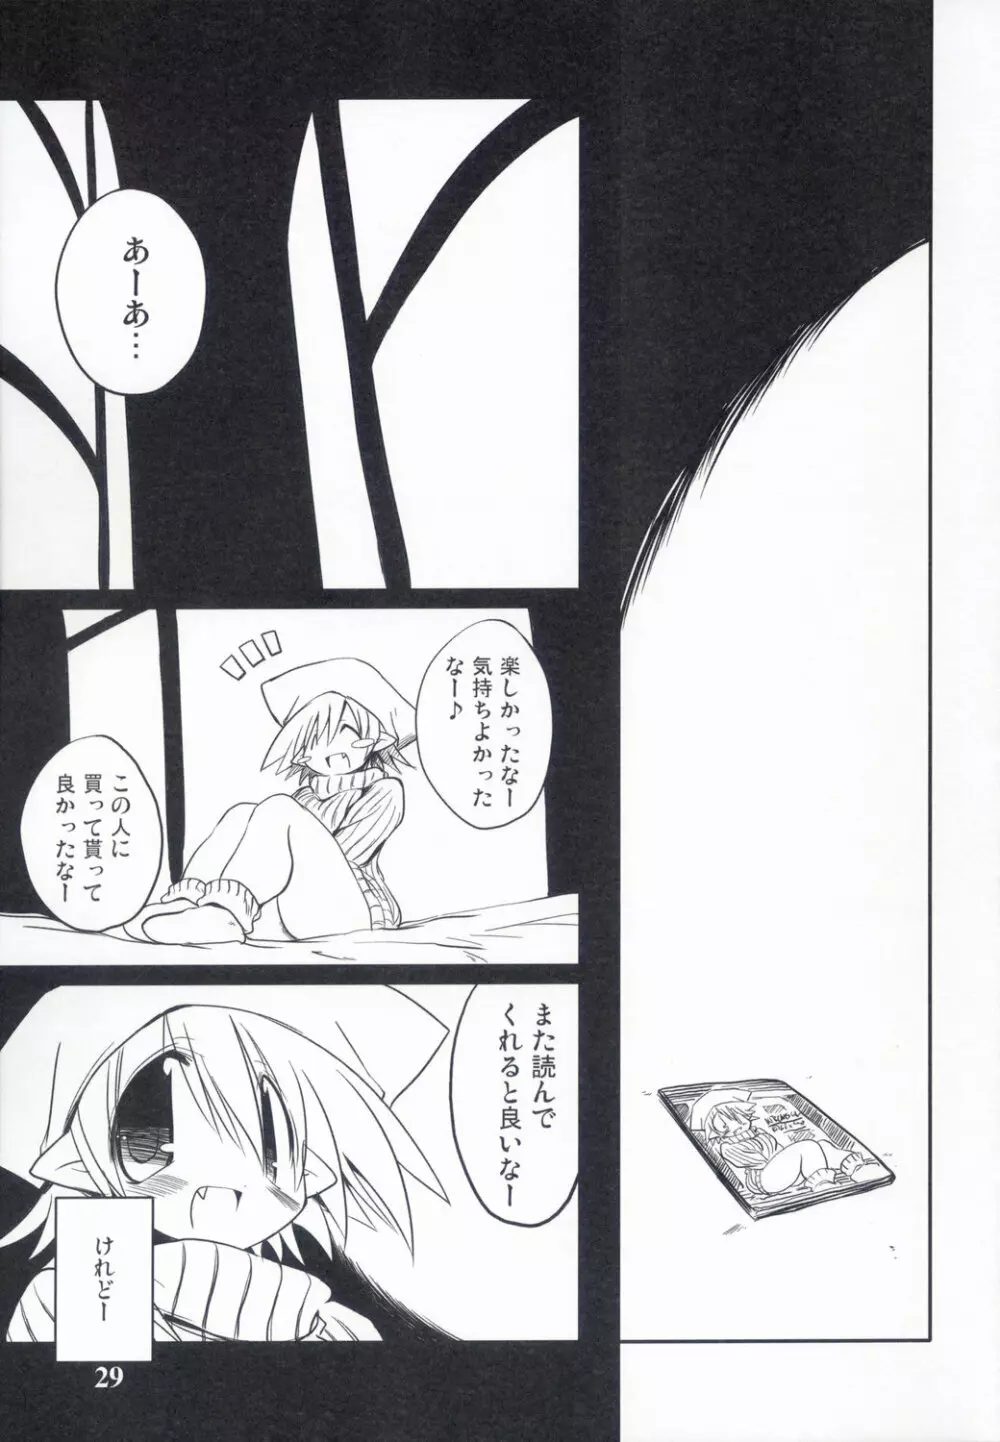 Intermission -同人誌の妖精さん- 29ページ